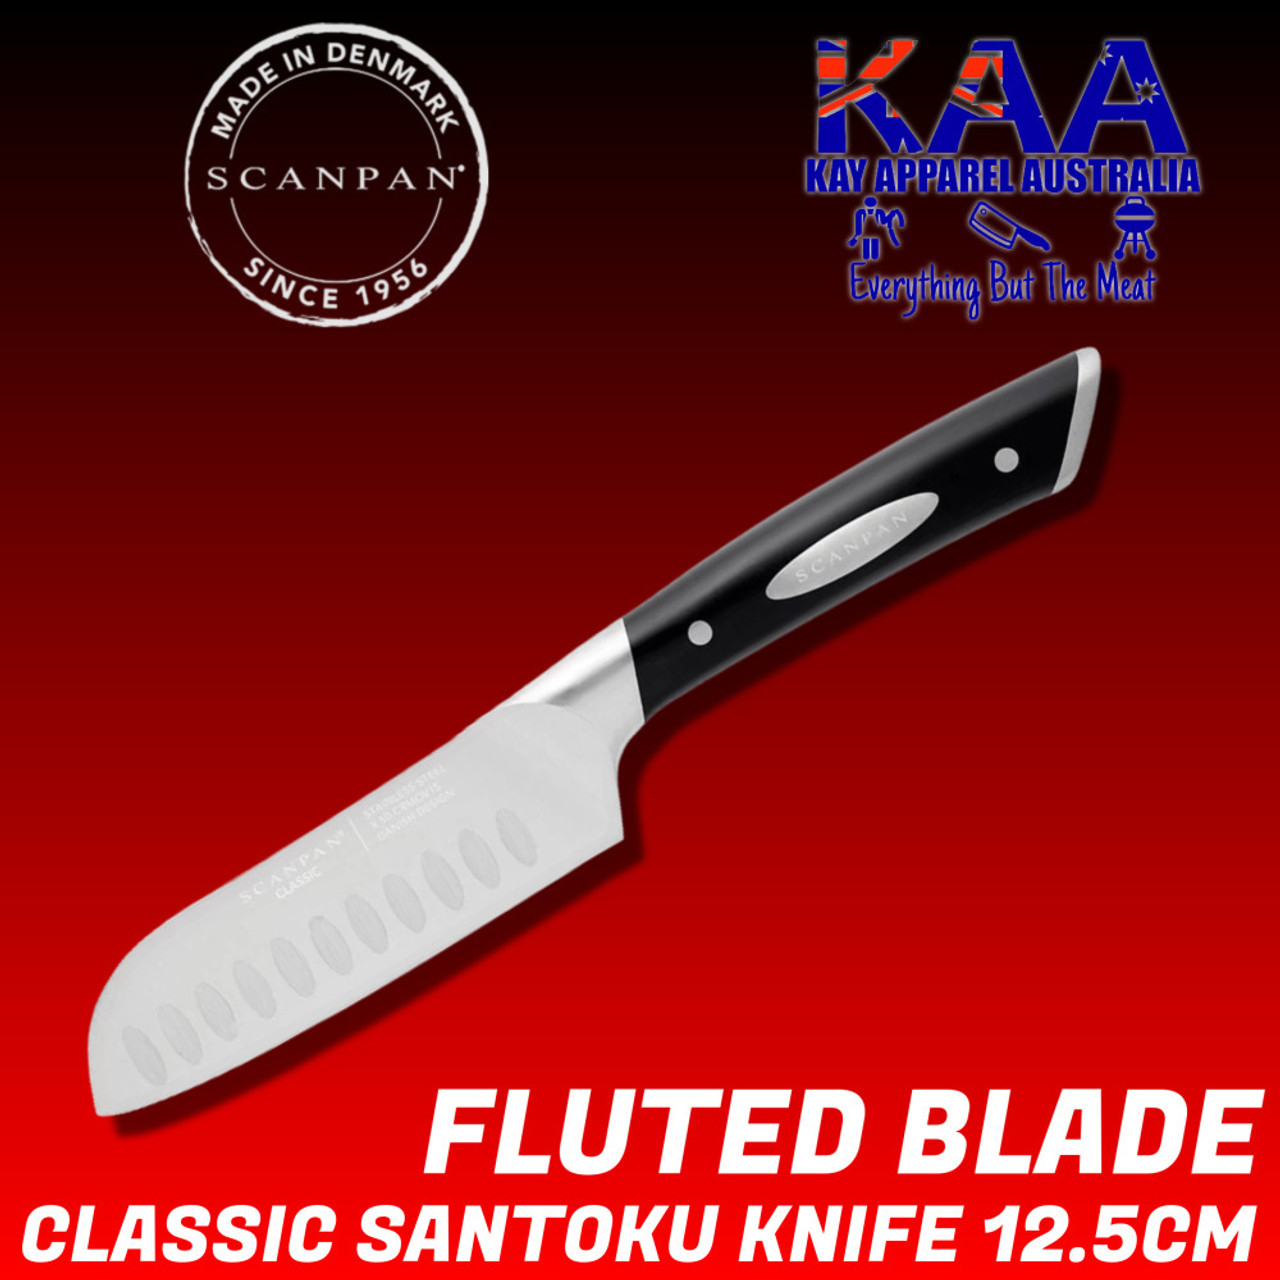 Scanpan Classic Santoku Knife with Granton Edge 12.5cm